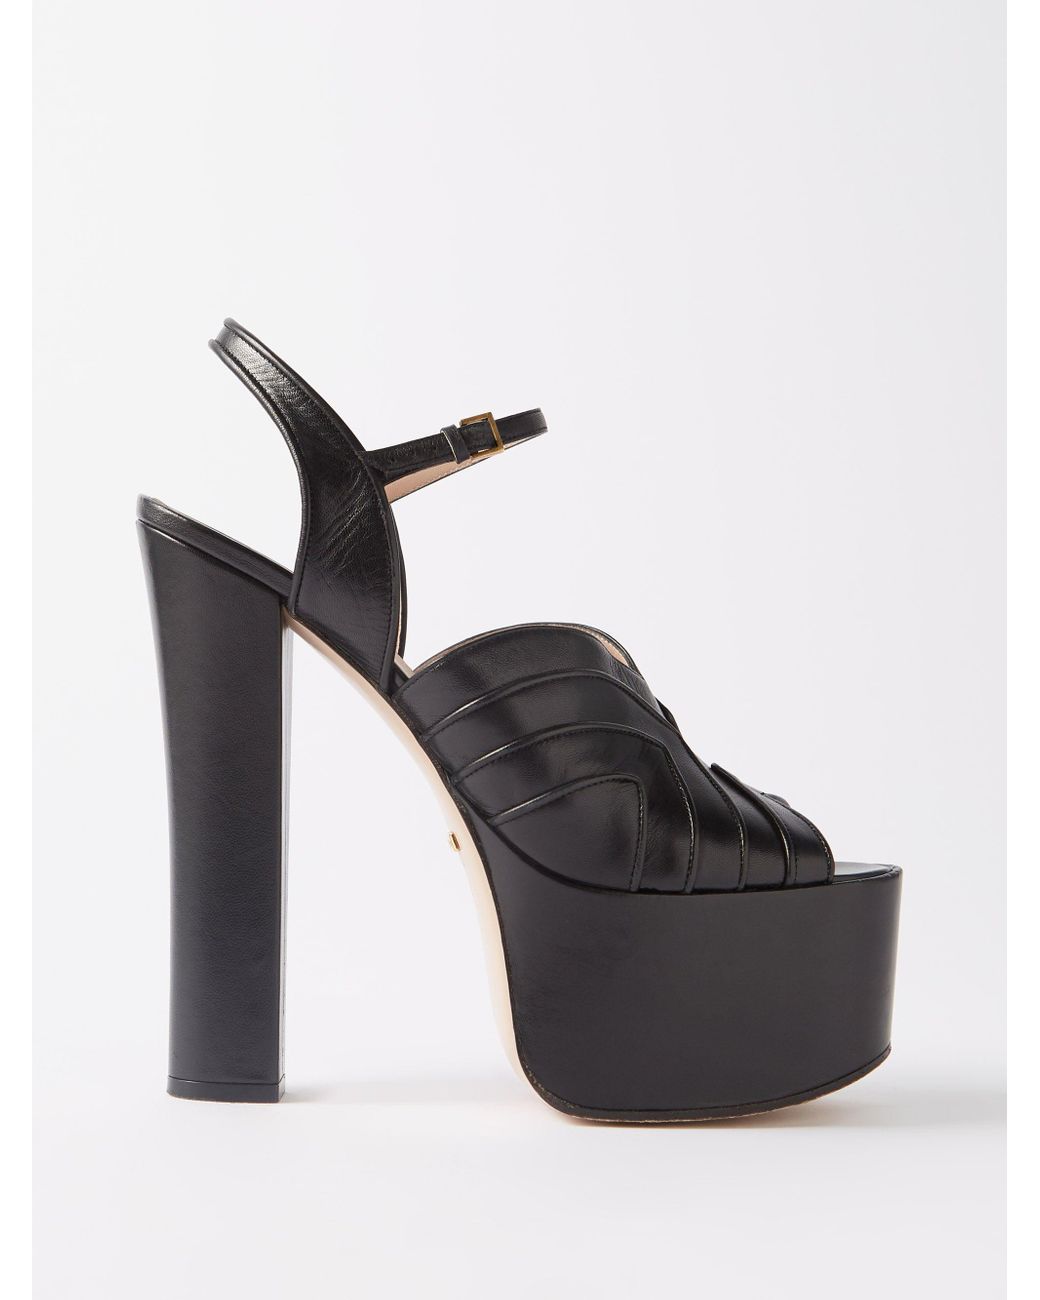 Gucci Keyla 95mm Leather Sandals in Black | Lyst